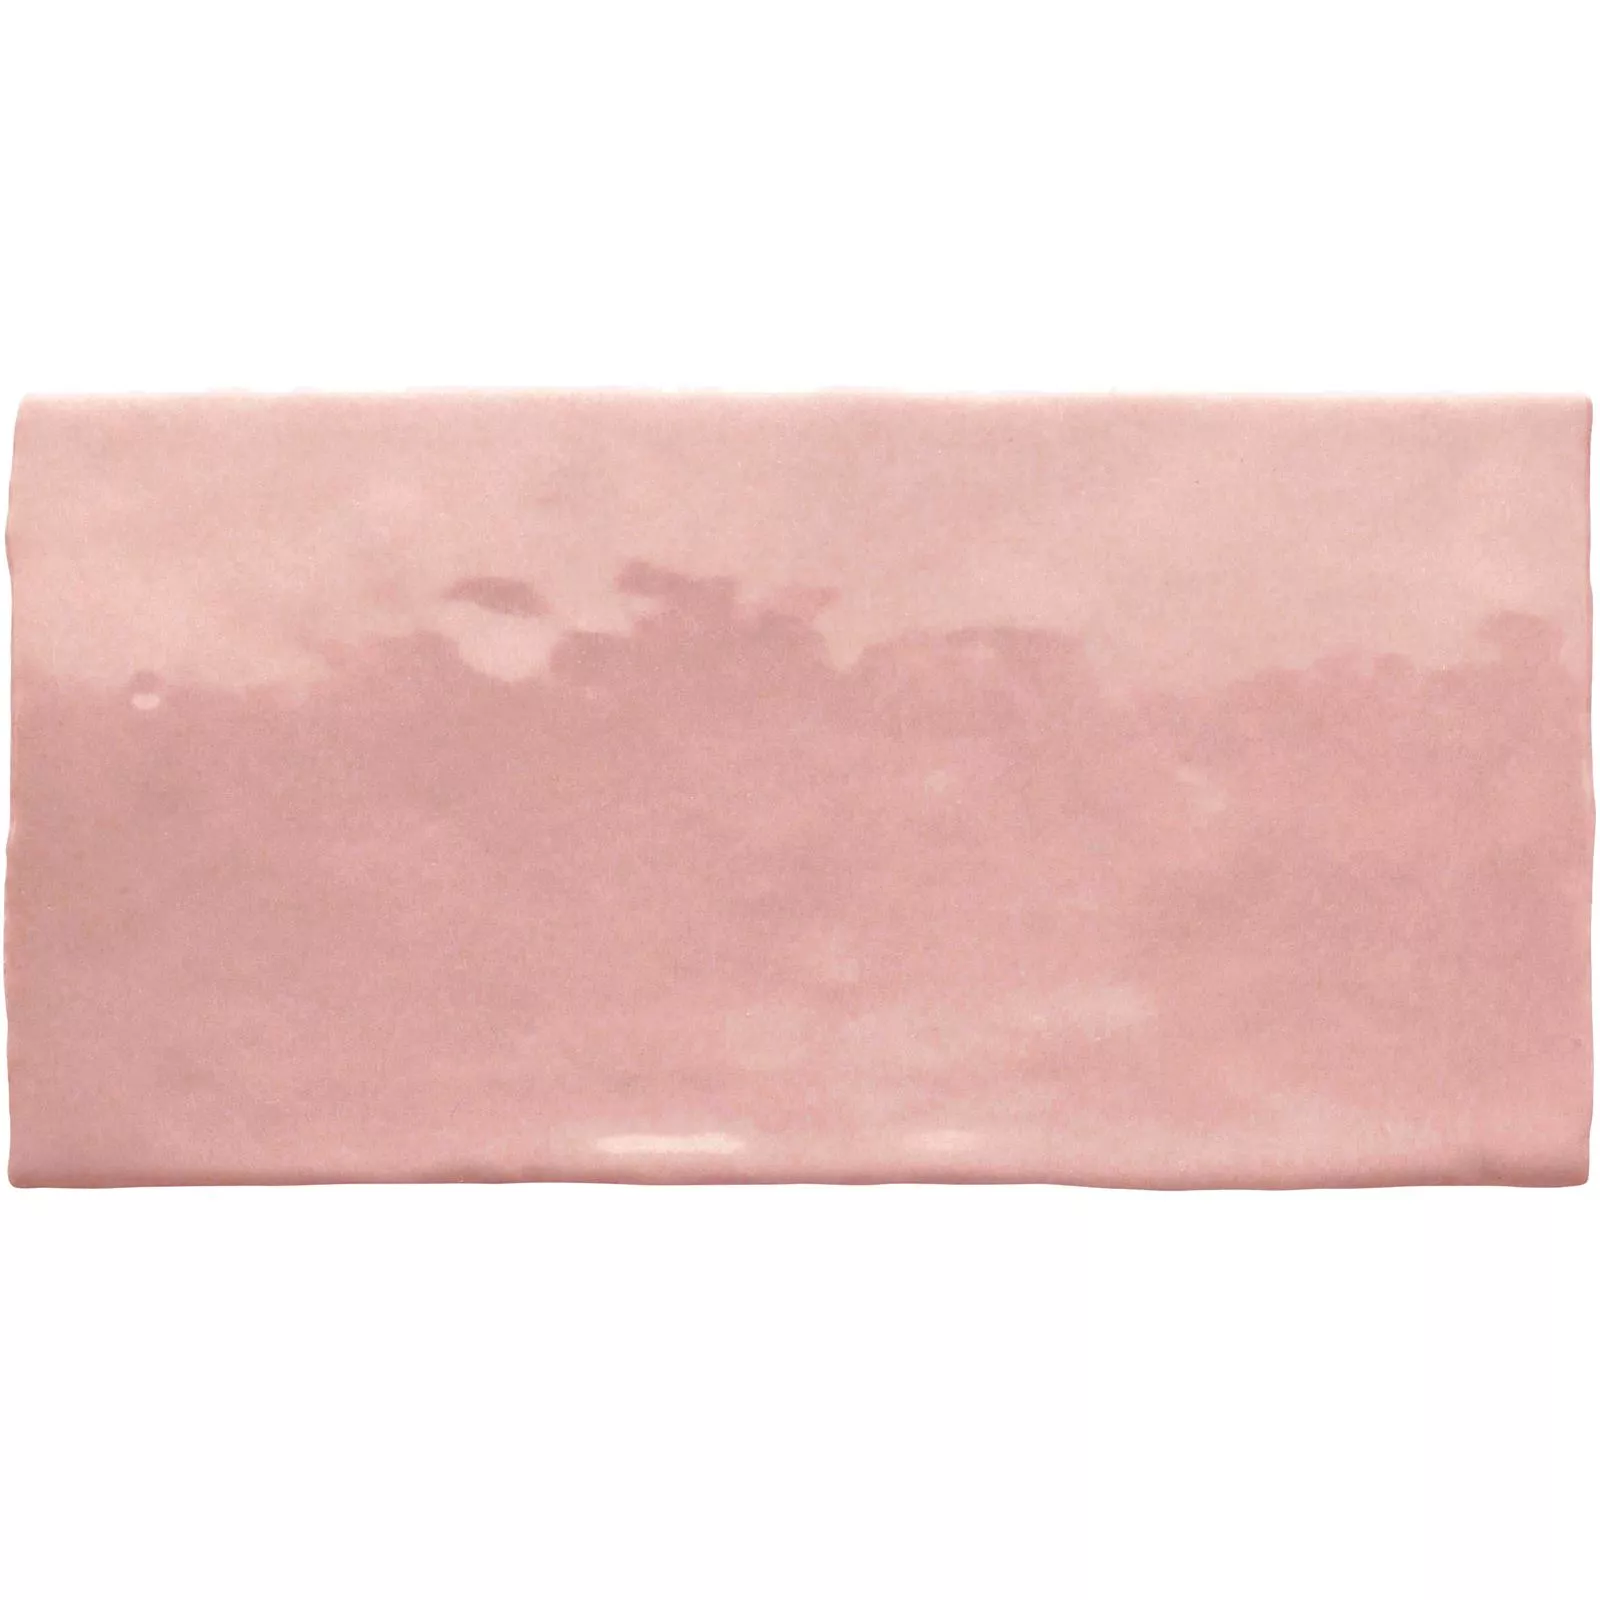 Vzorek Obkladačka Algier Ručně Vyrobené 7,5x15cm Růžová Pink